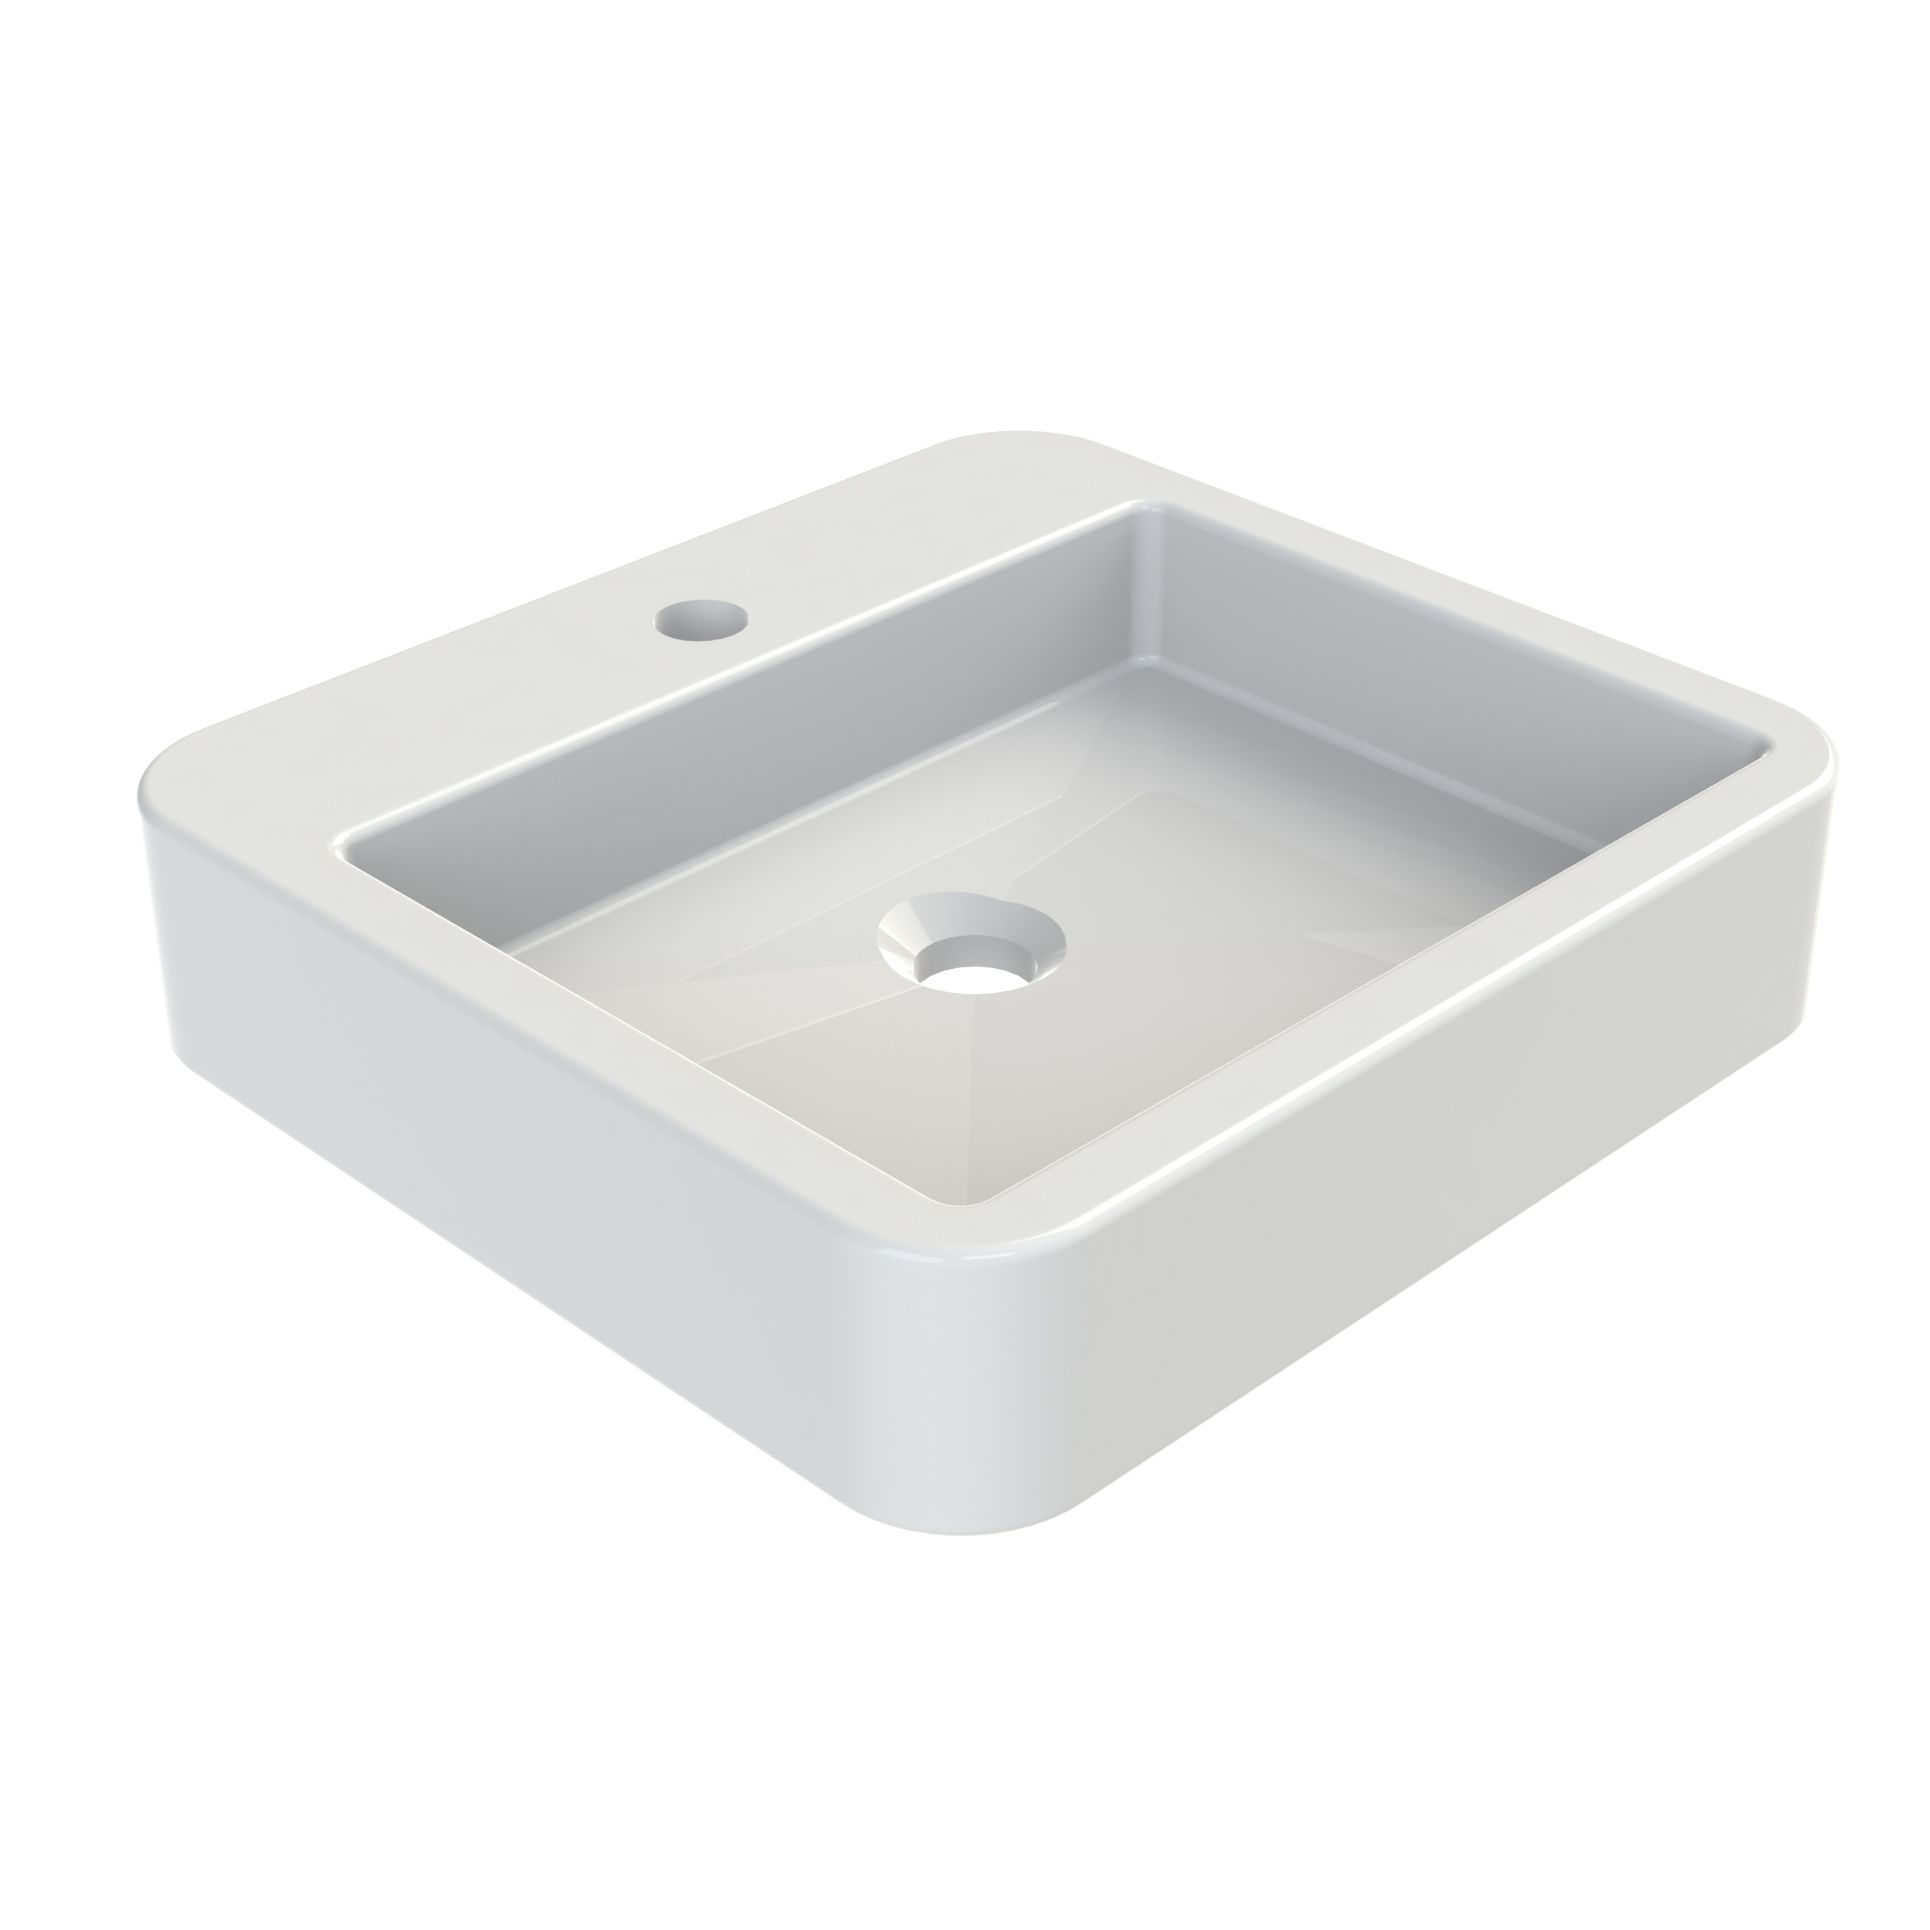  Freestanding washbasin 45 cm square